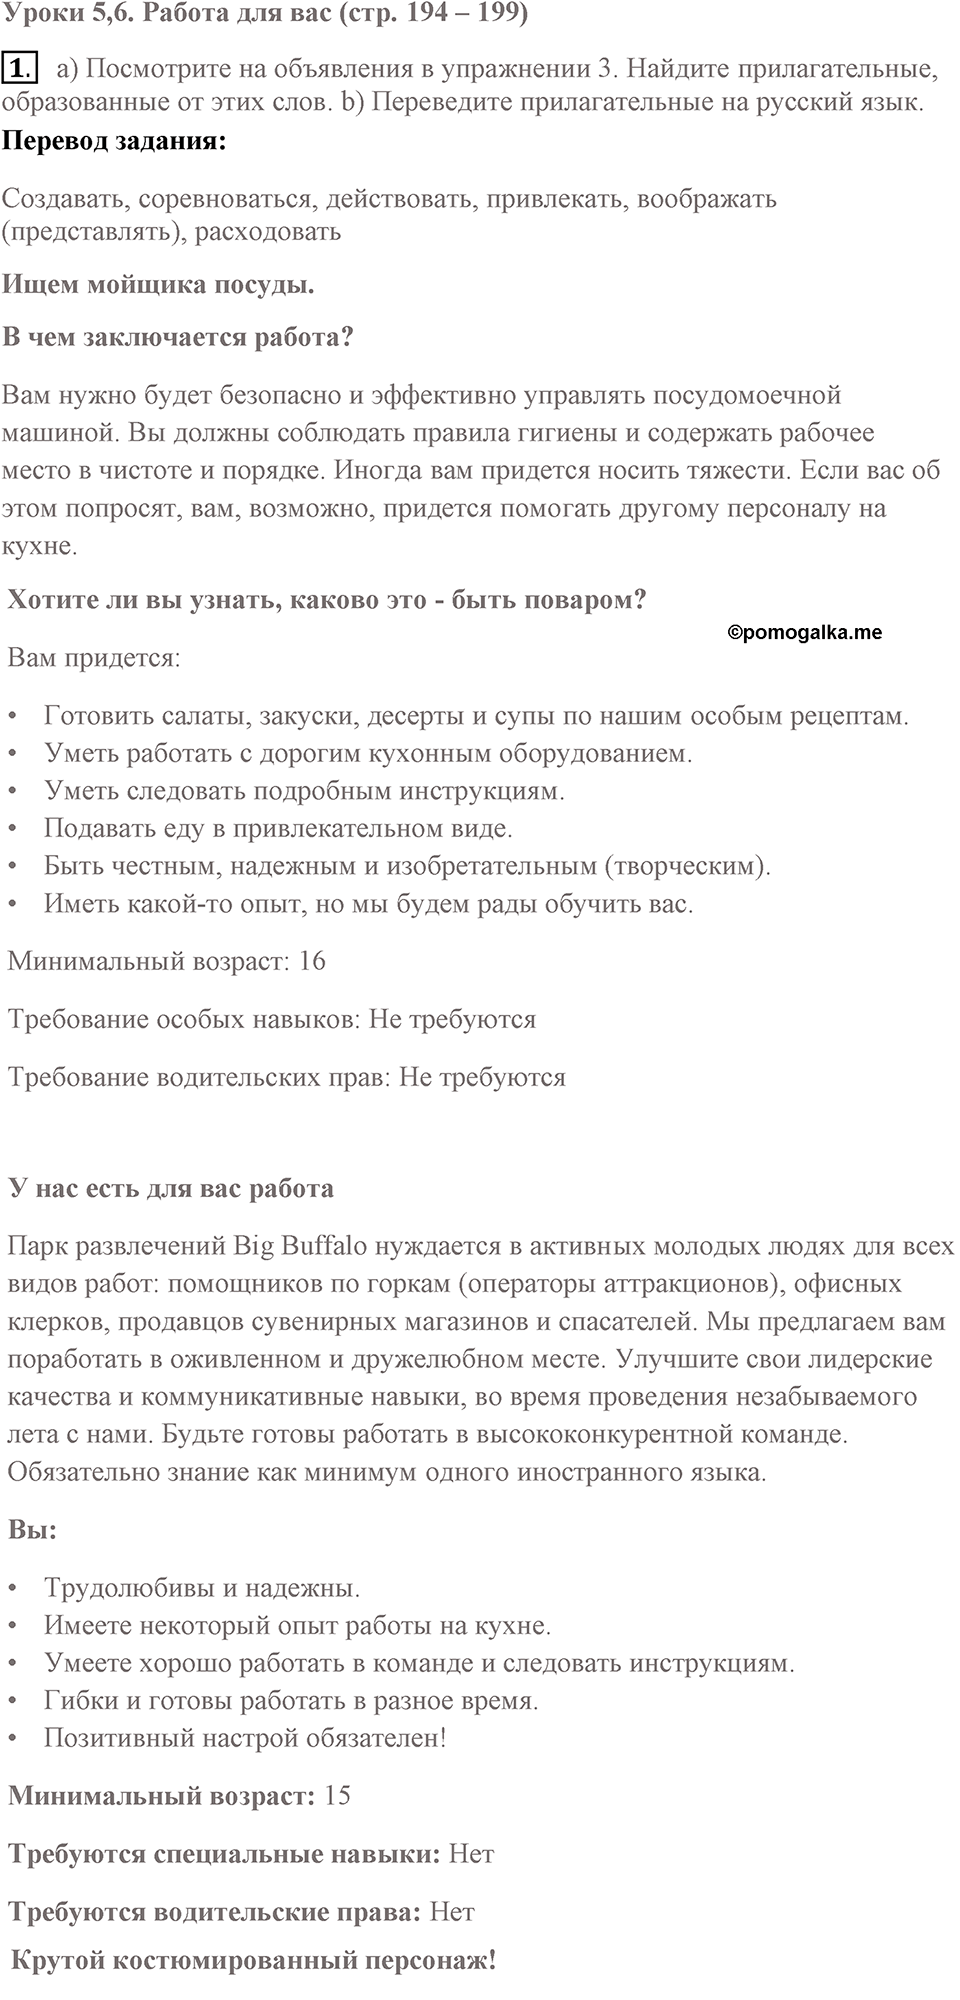 Unit 6 lesson 5-6 exercise №1 английский язык 9 класс Happy English.ru